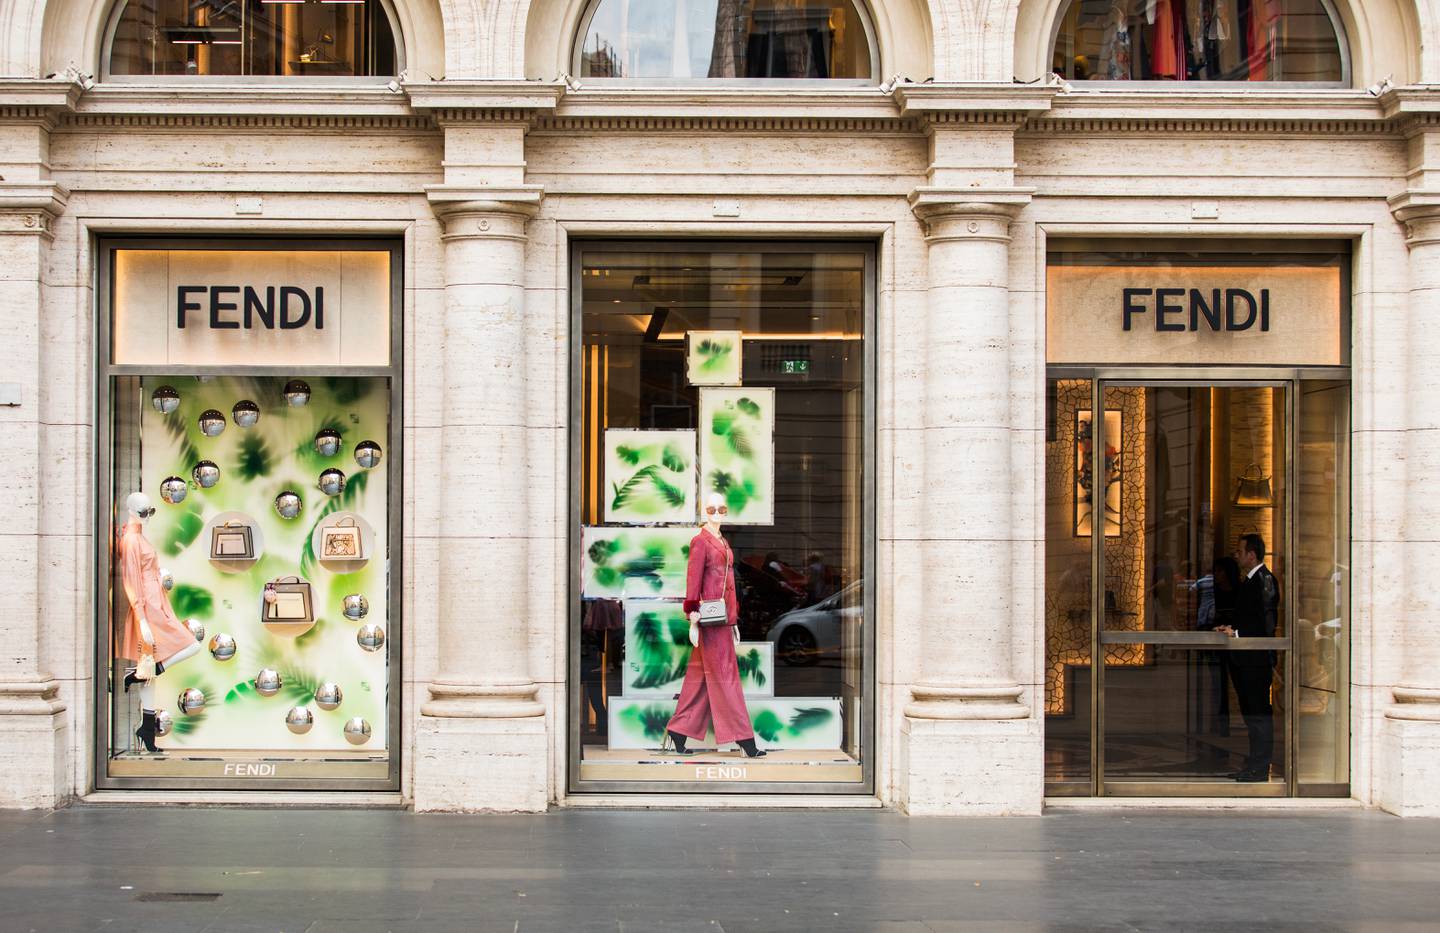 Fendi store in Rome, Italy